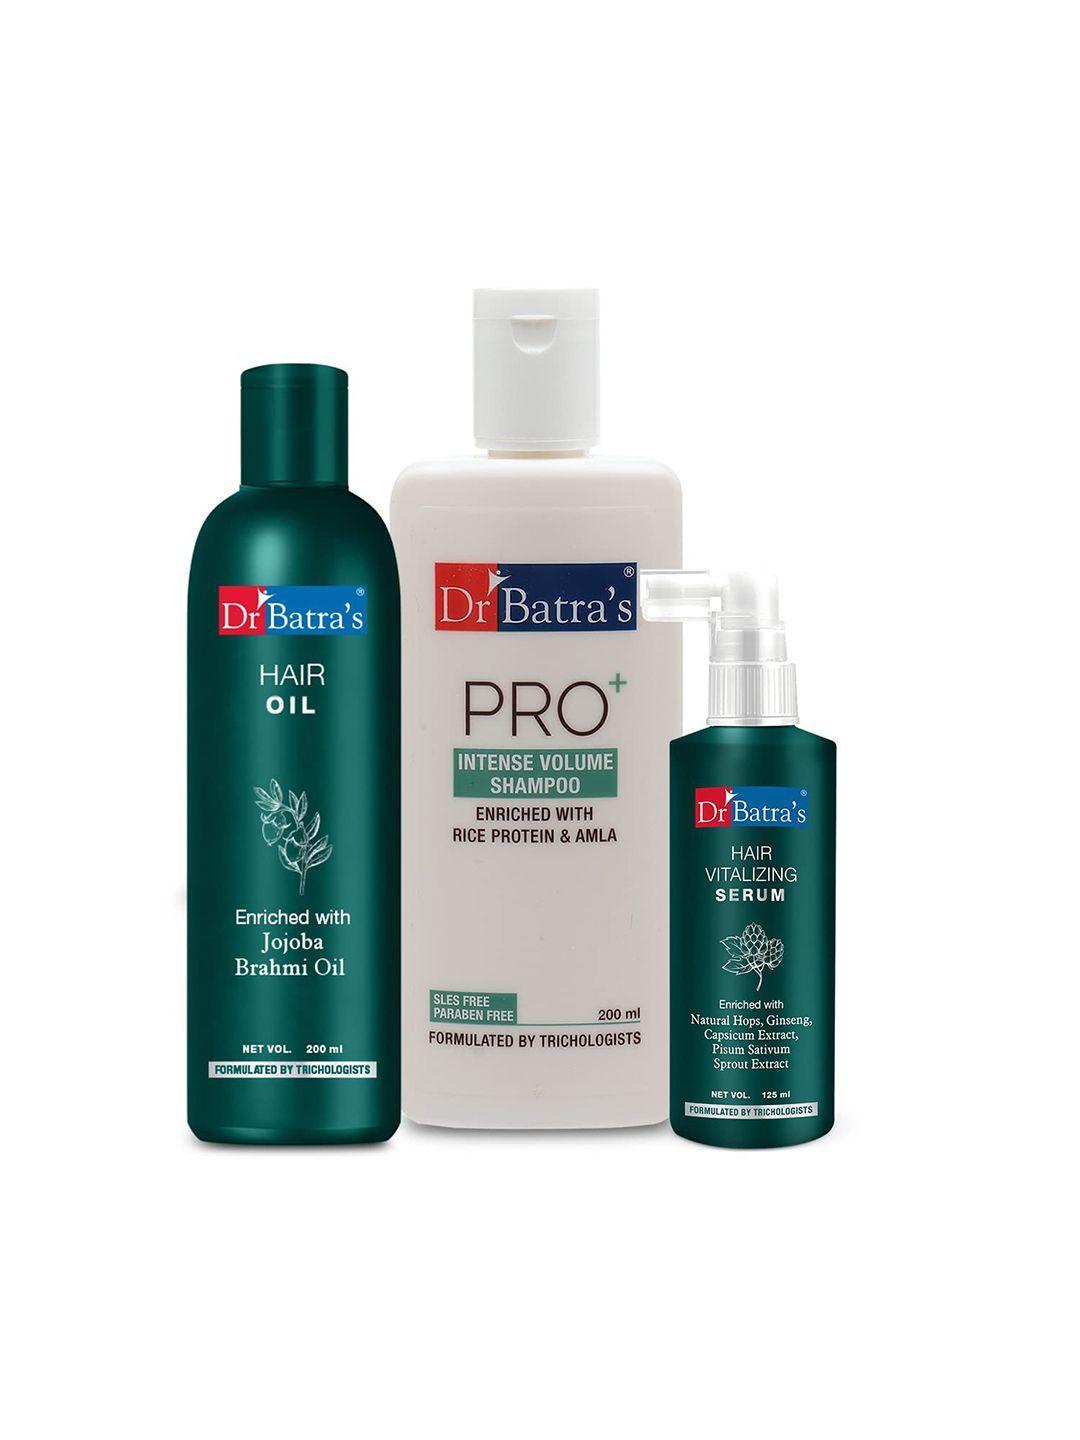 dr. batras hair vitalizing serum 125ml+ pro+ intense volume shampoo 200ml+ hair oil 200ml